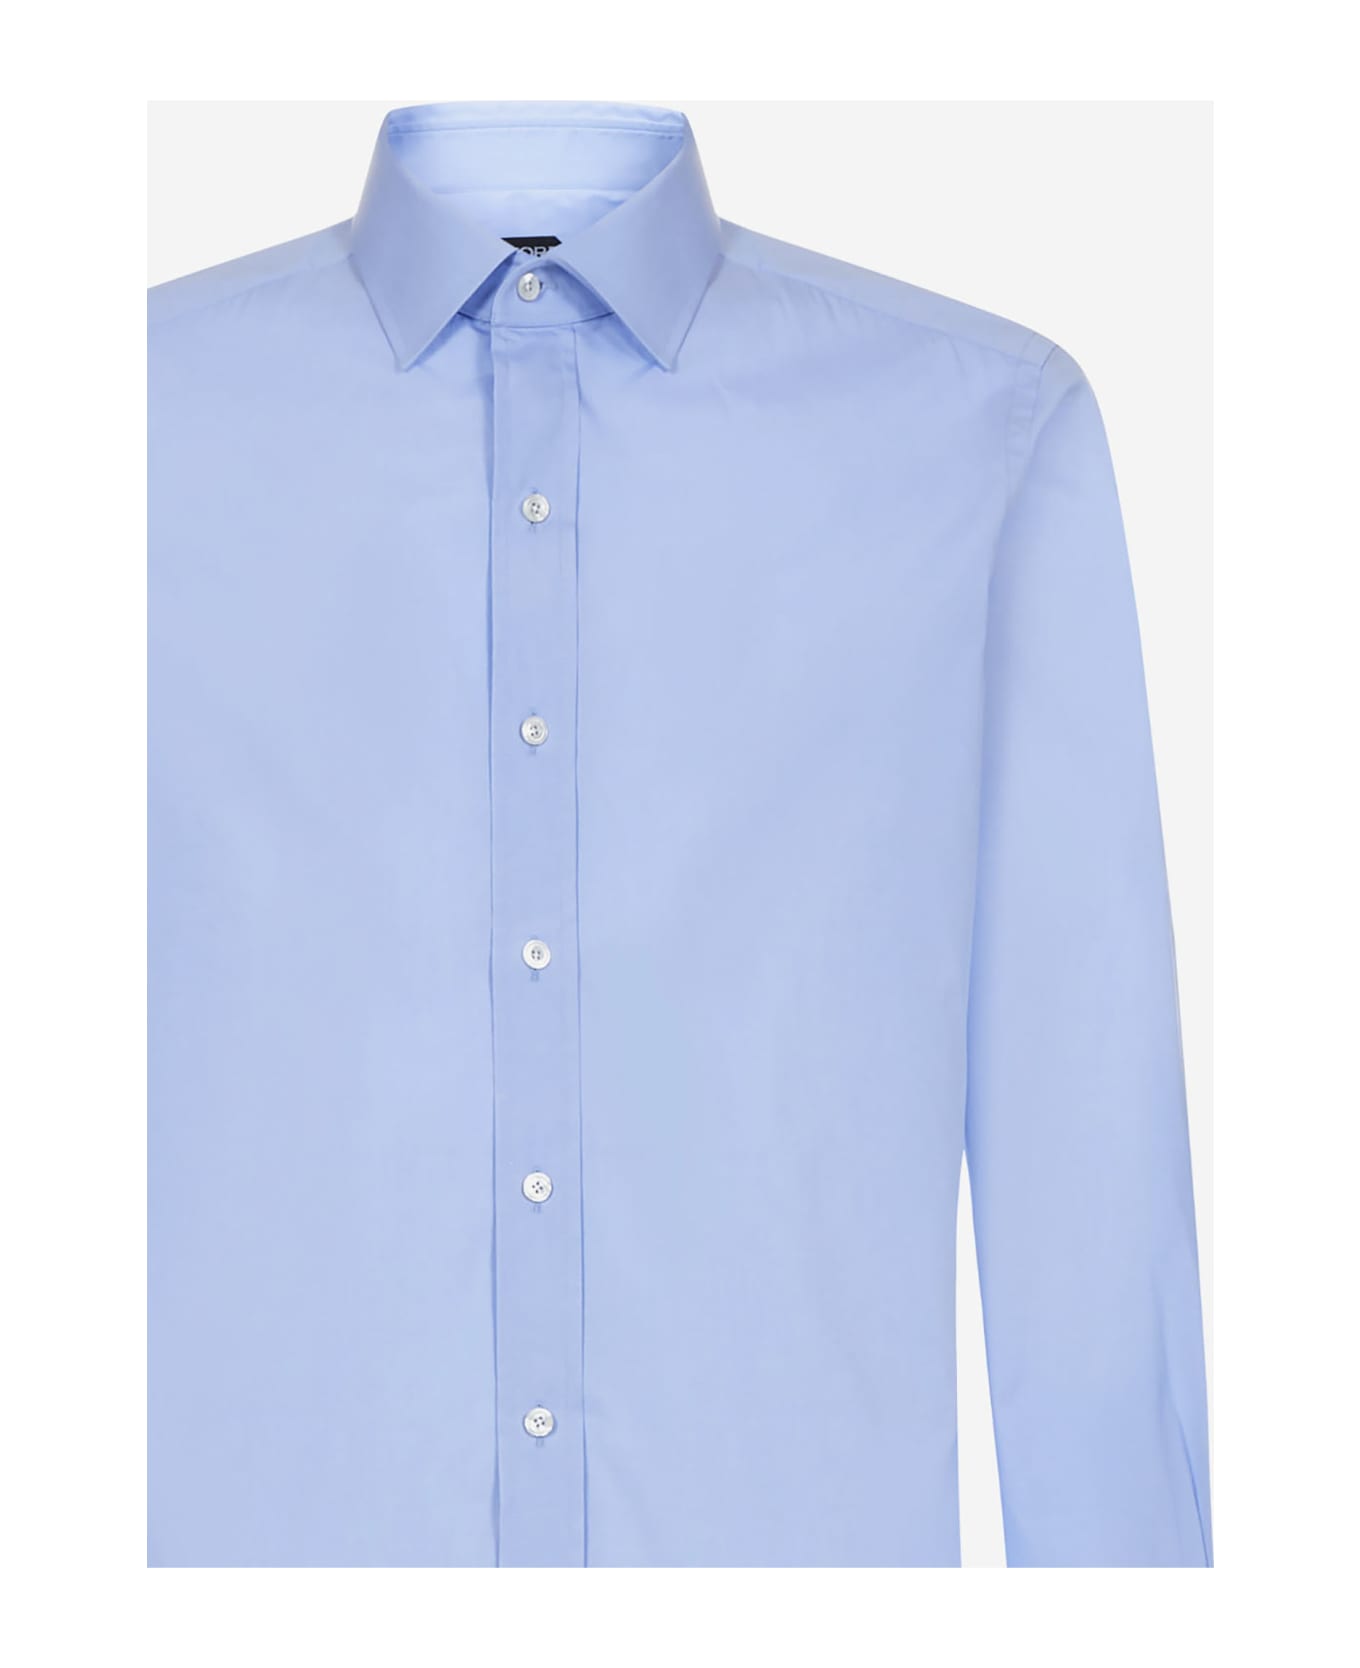 Tom Ford Shirt - Light blue